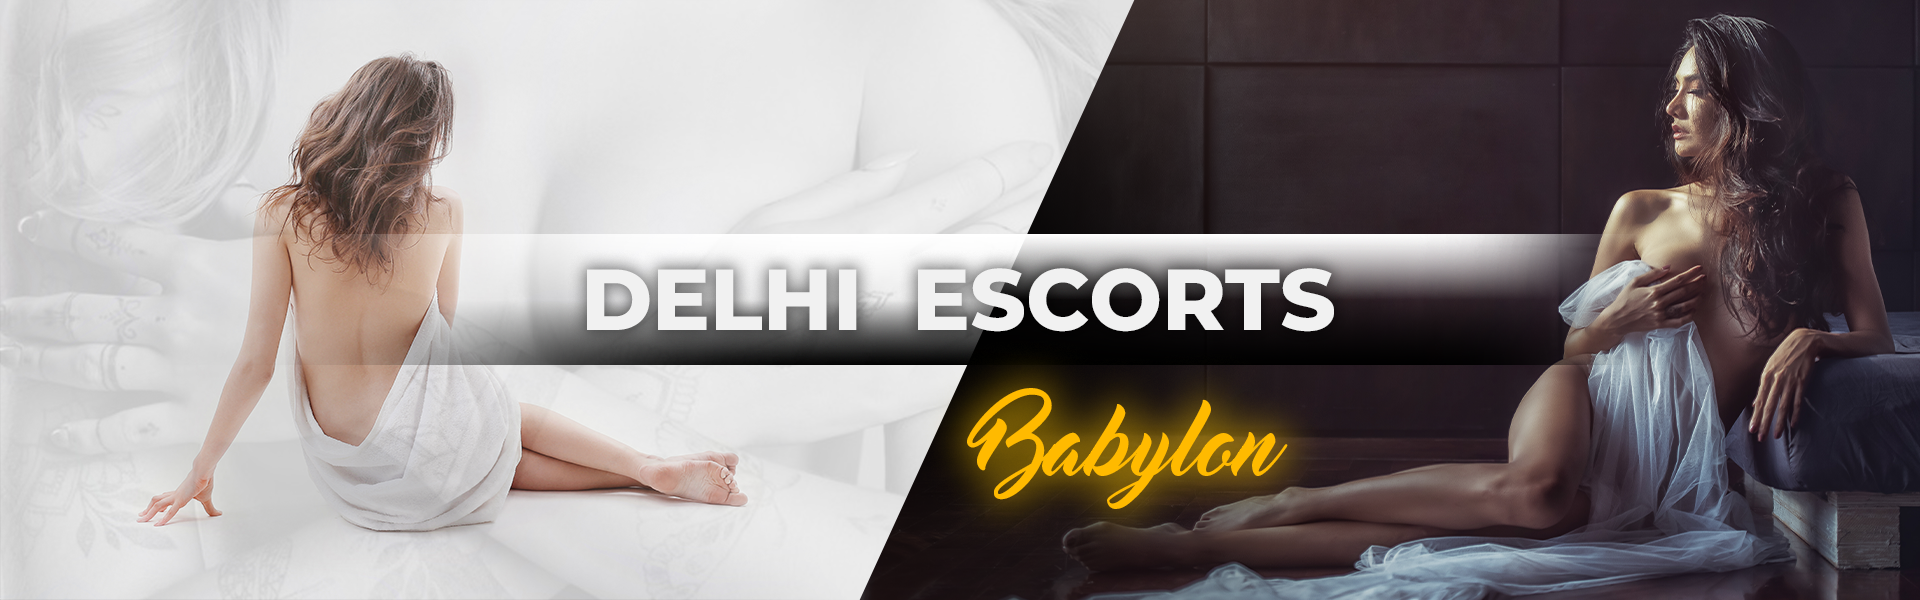 Delhi Escorts Babylon | Find the top escort service in Delhi